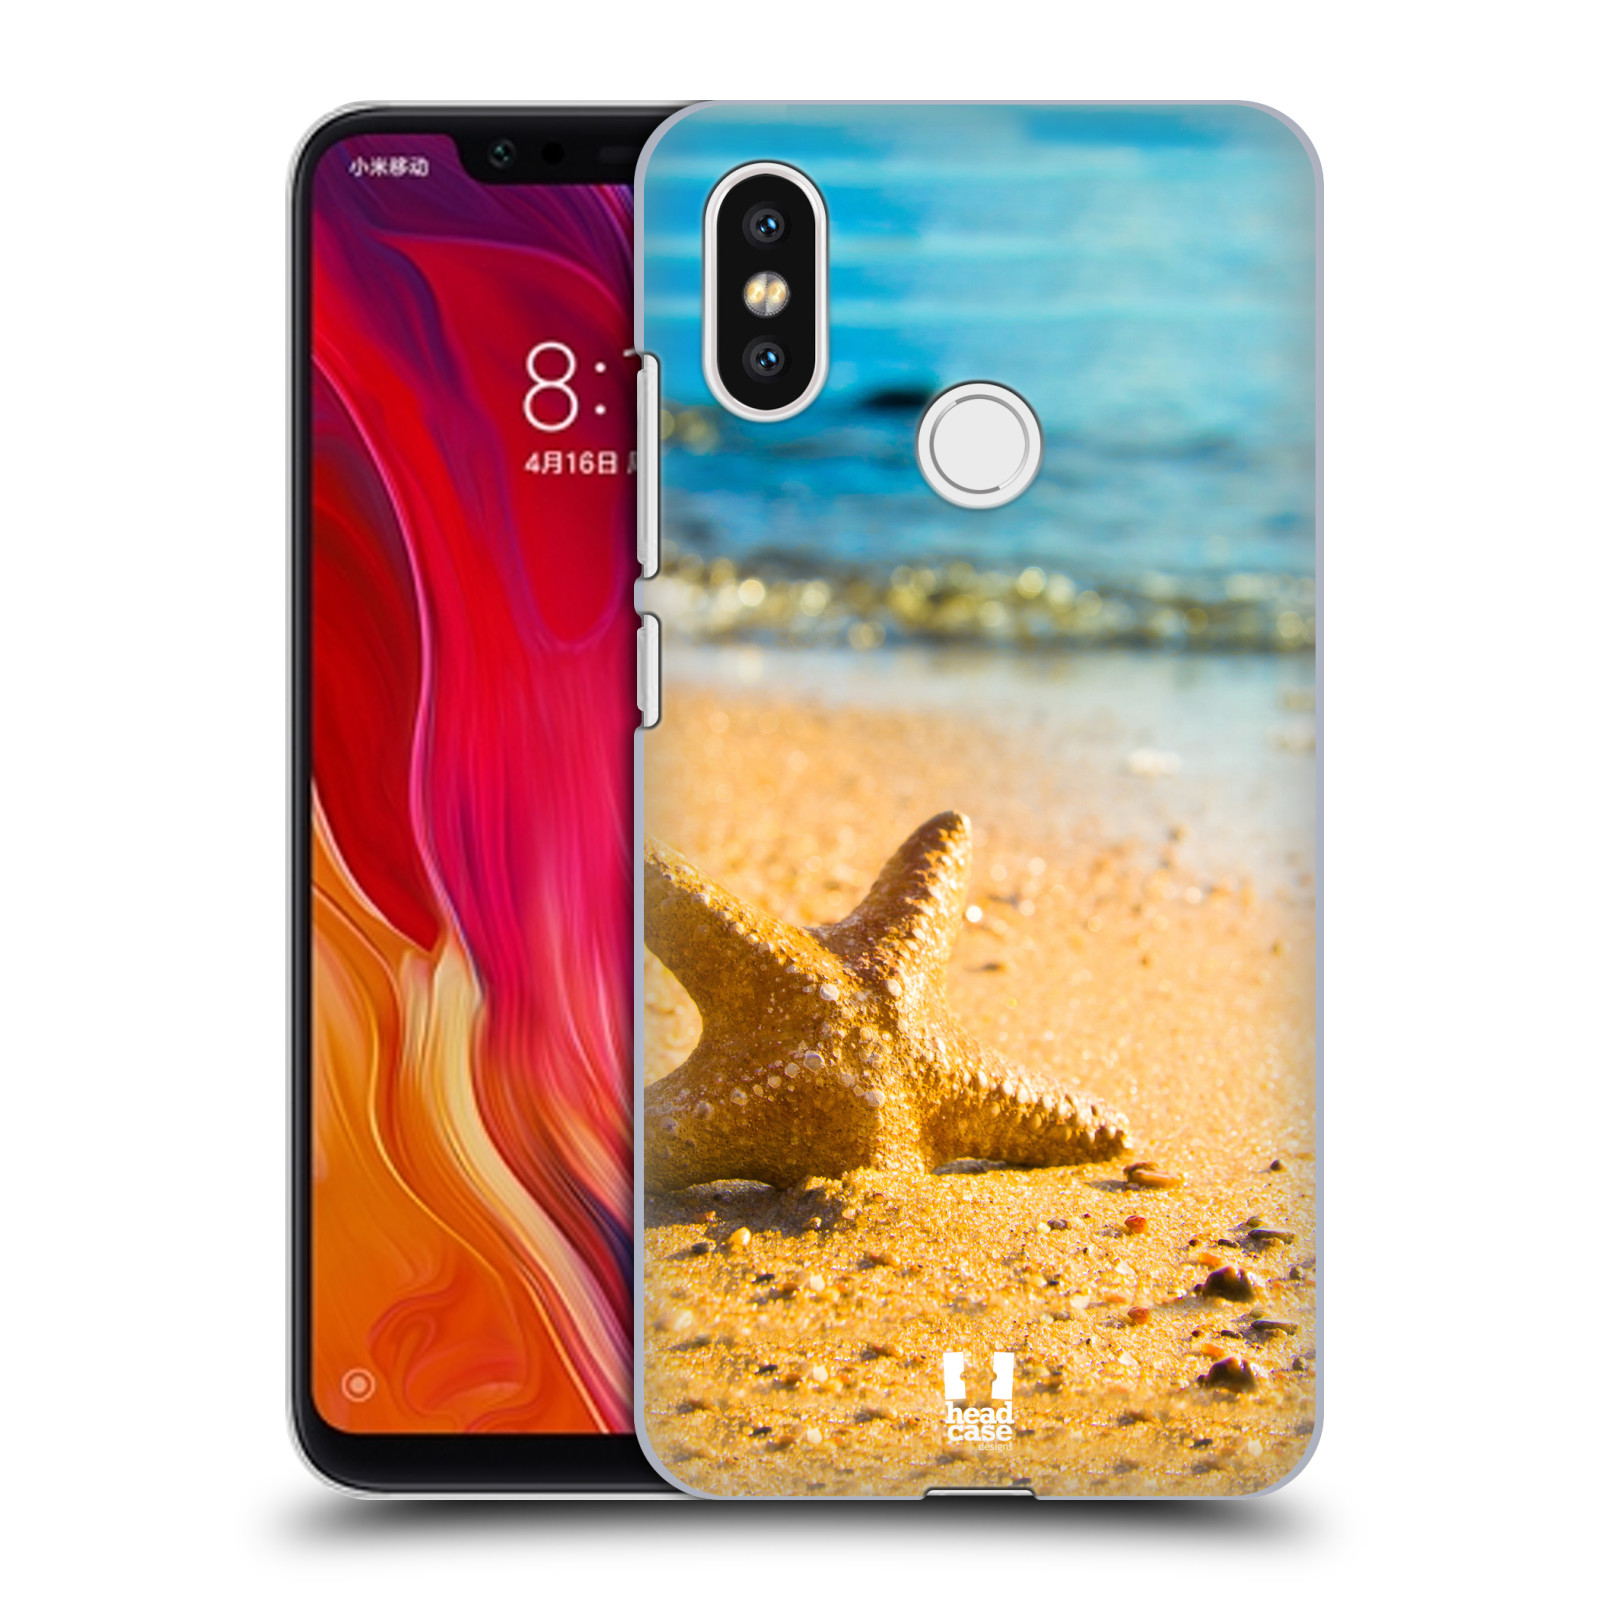 HEAD CASE plastový obal na mobil Xiaomi Mi 8 vzor slavná zvířata foto hvězdice v písku